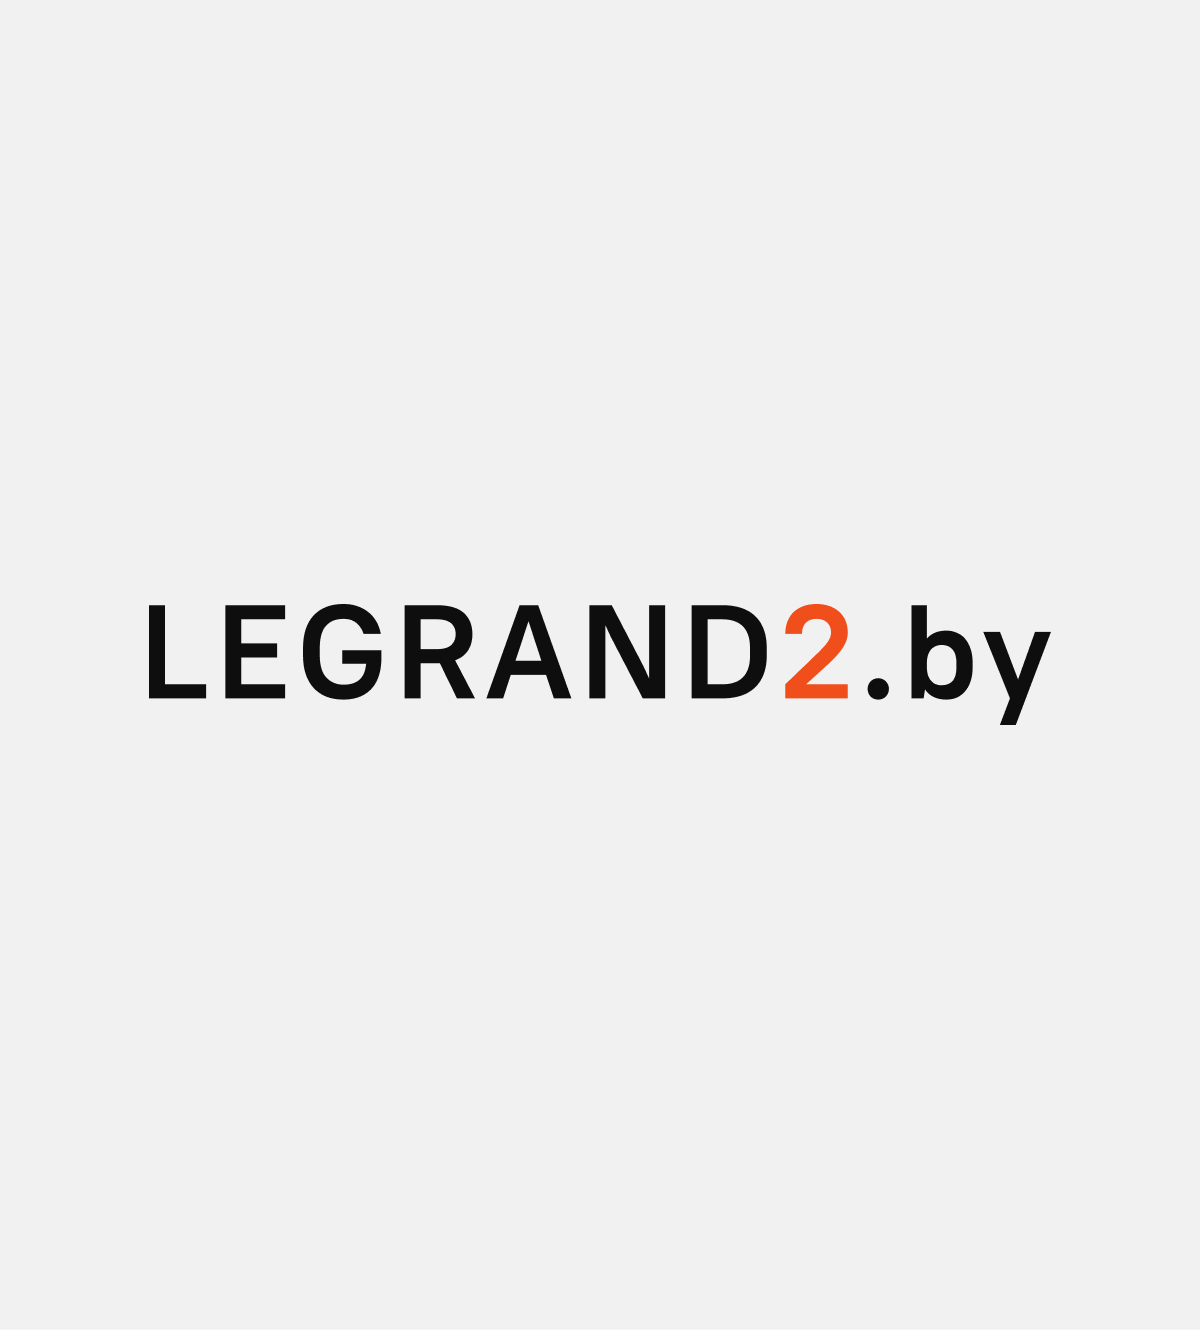 Legrand2